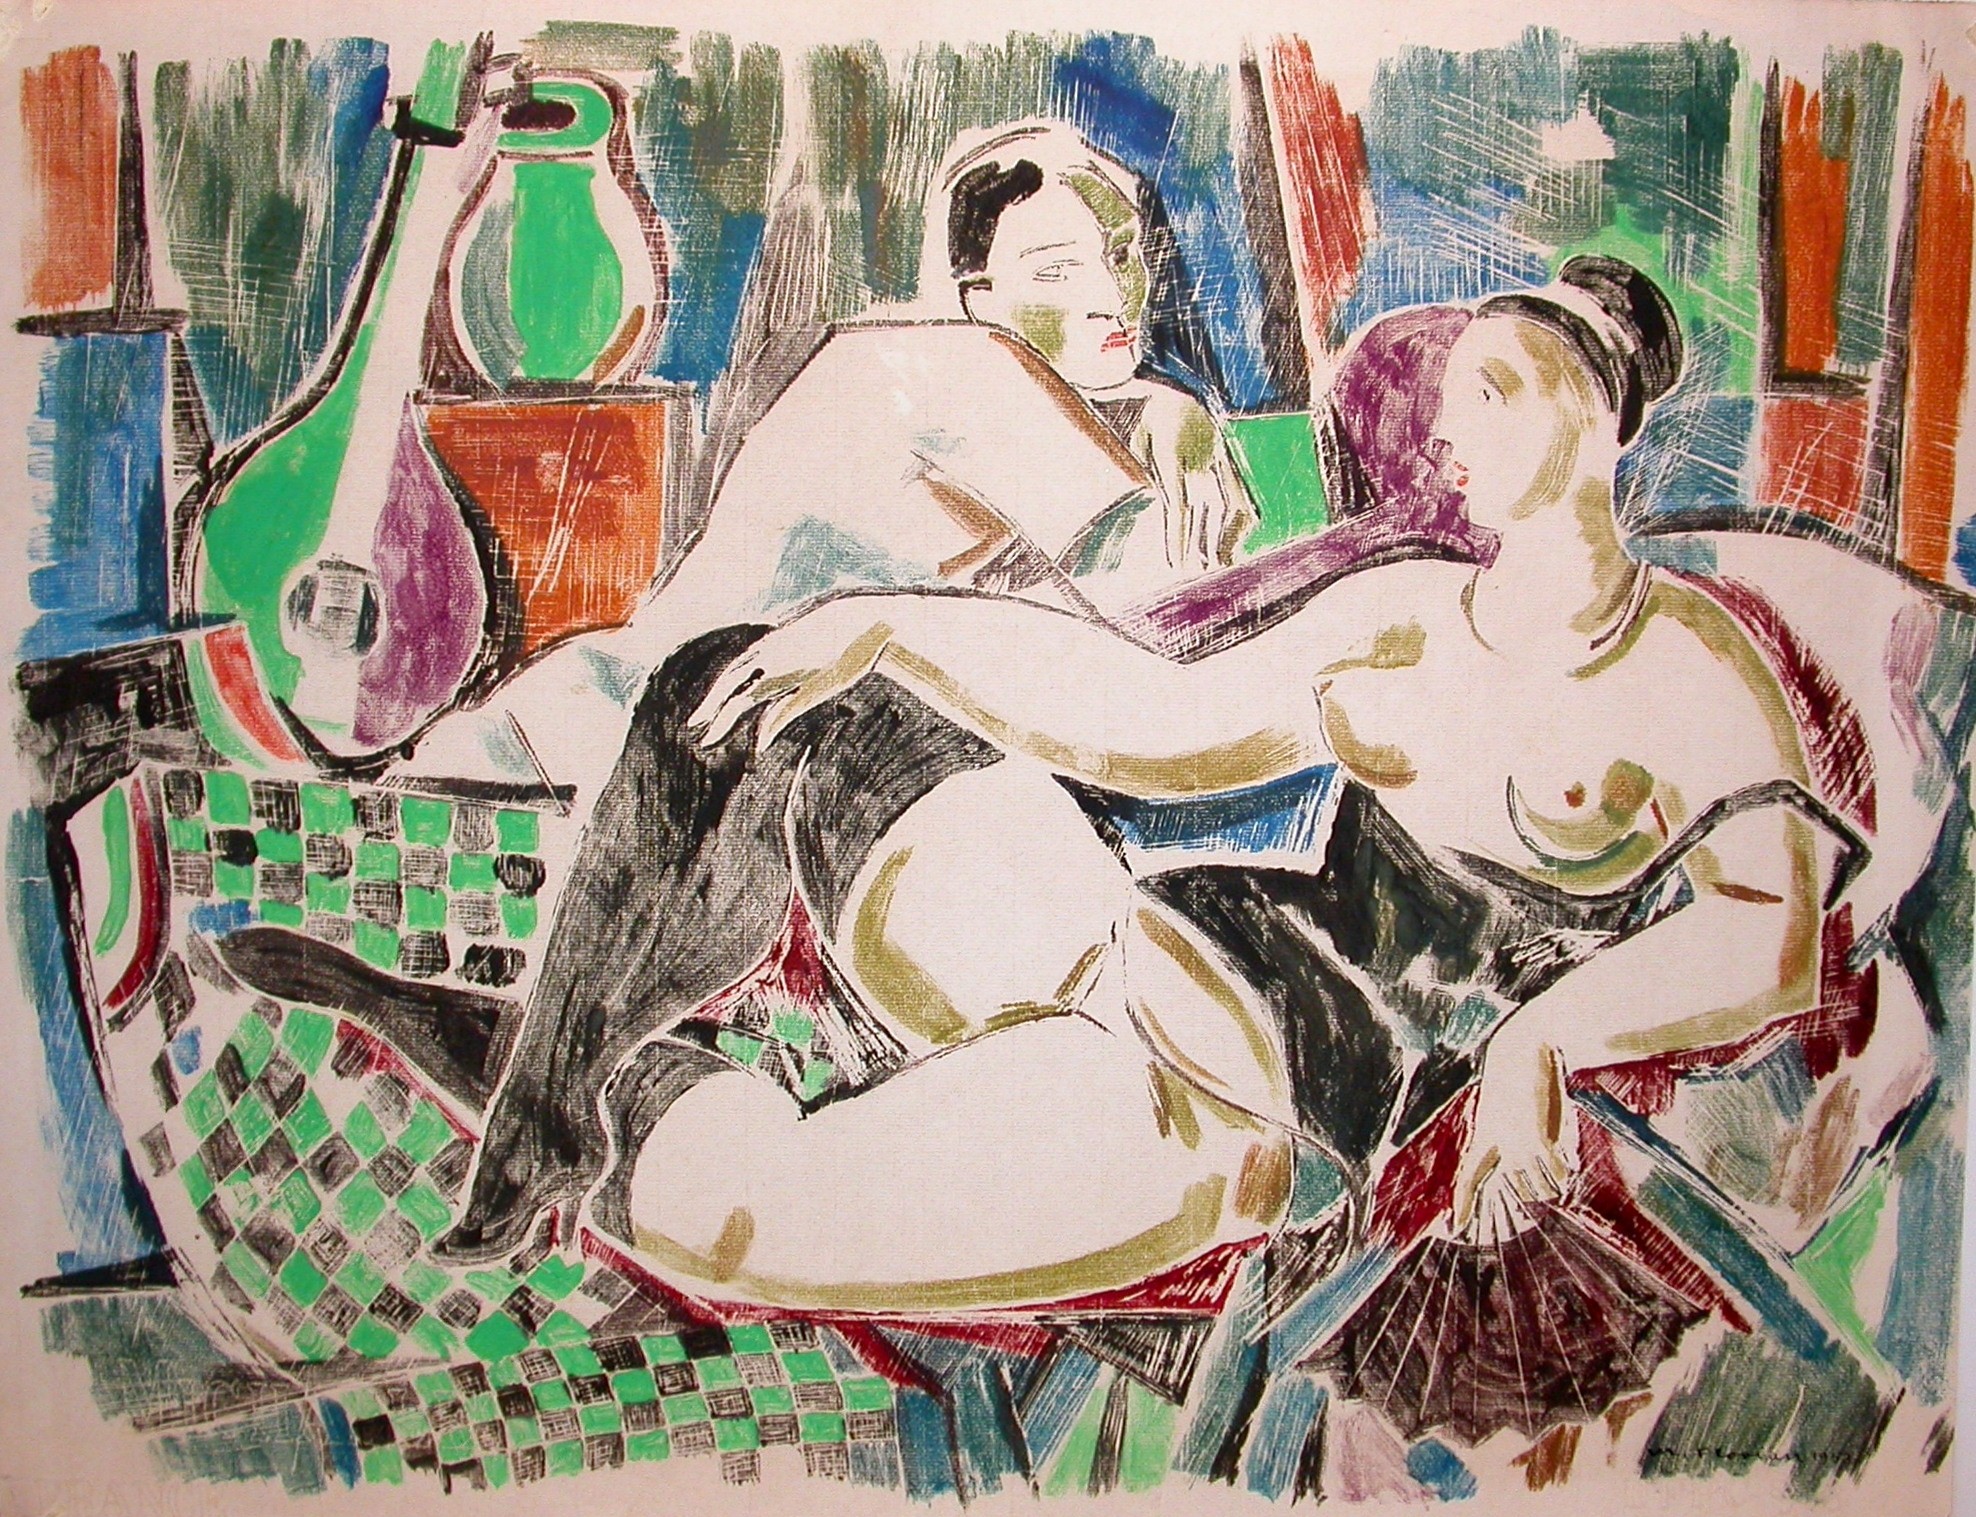  Florian (1901 - 1982) "Dame in erotischer Pose"